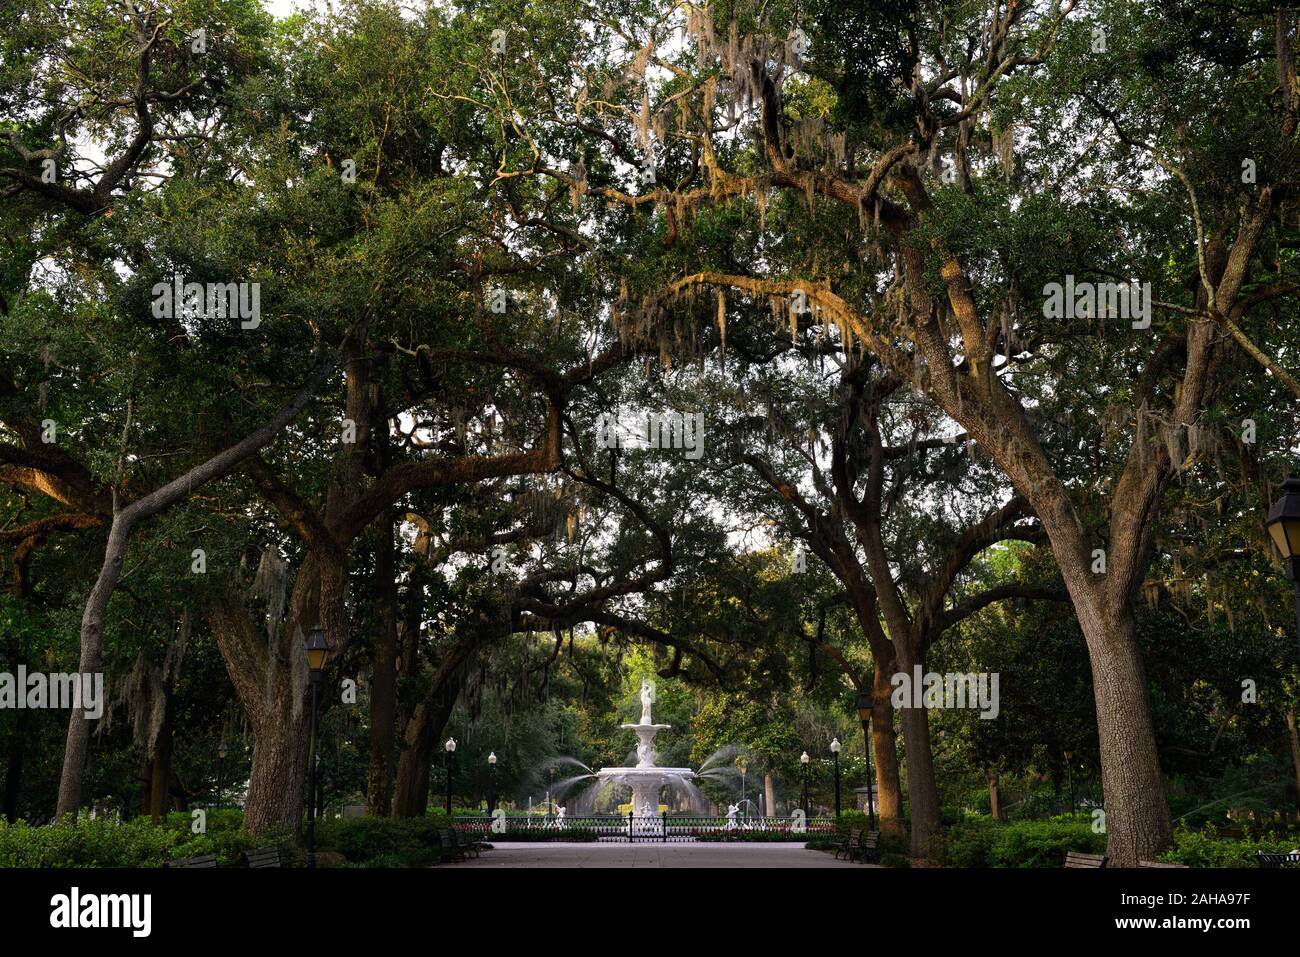 Forsyth Park fountain,Savannah,Georgia,USA,public parks,water feature,features,cast iron fountain,moss-hung oaks,park,RM USA Stock Photo